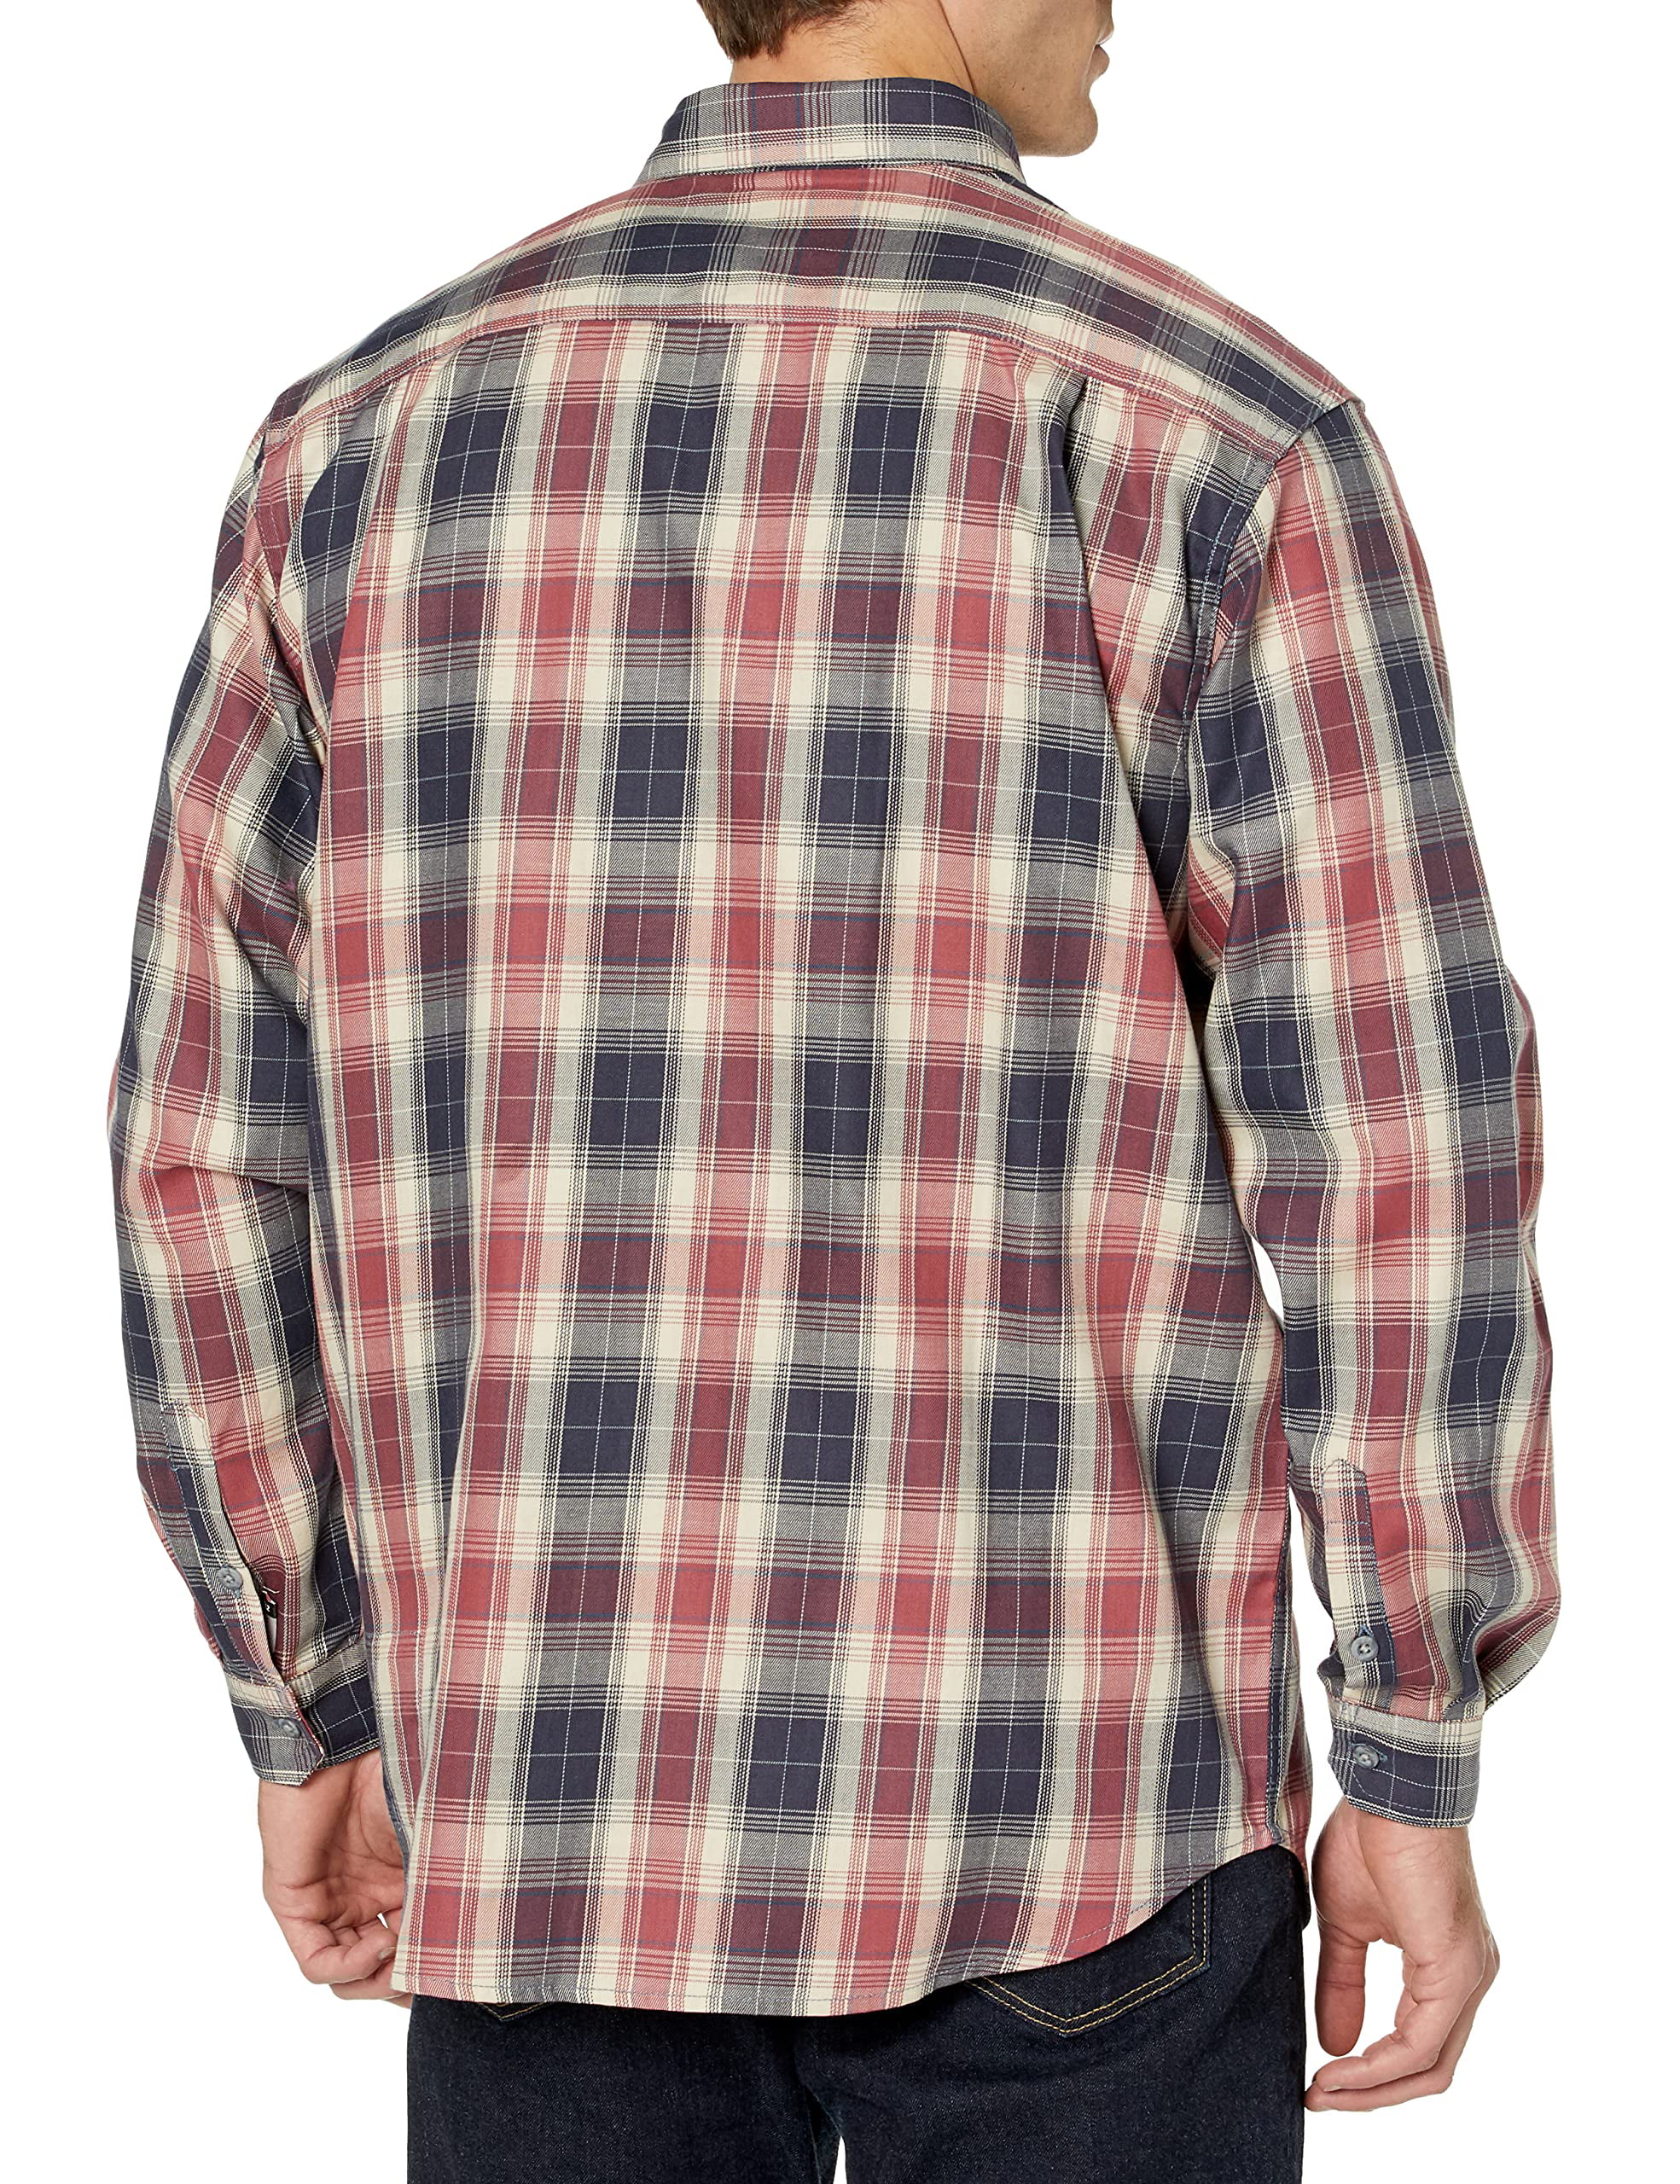 Carhartt Men's Flame-Resistant Force Rugged Flex Original Fit Twill Long-Sleeve Plaid Shirt 